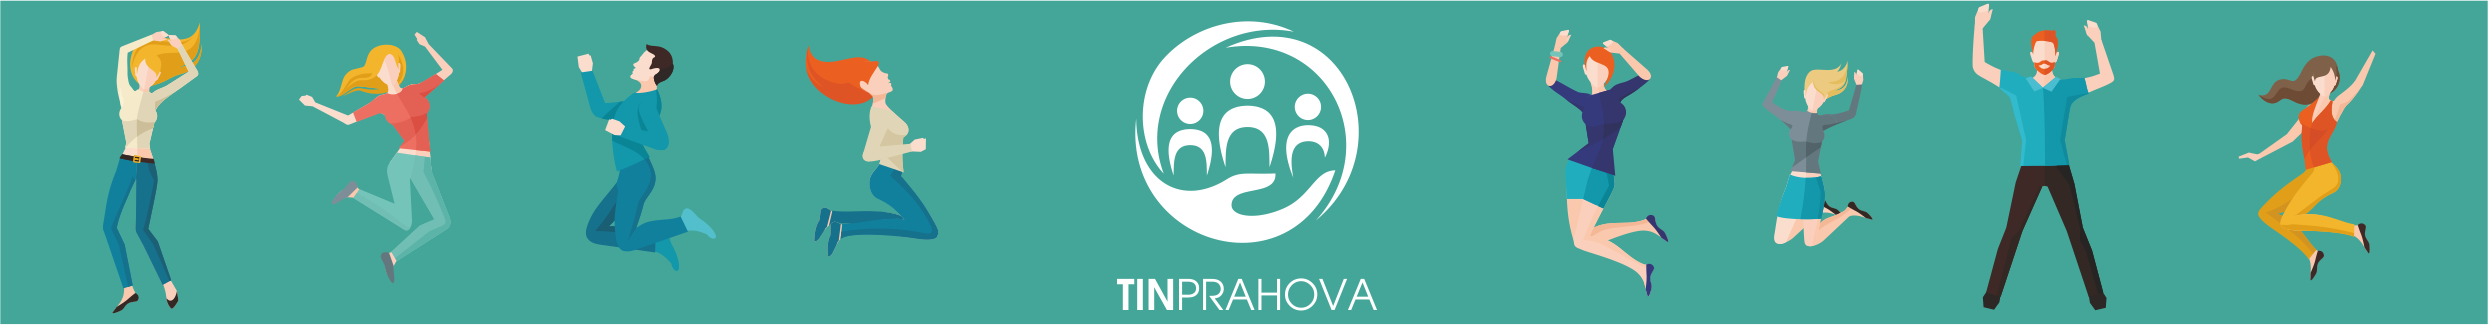 HEADER TINPRAHOVA